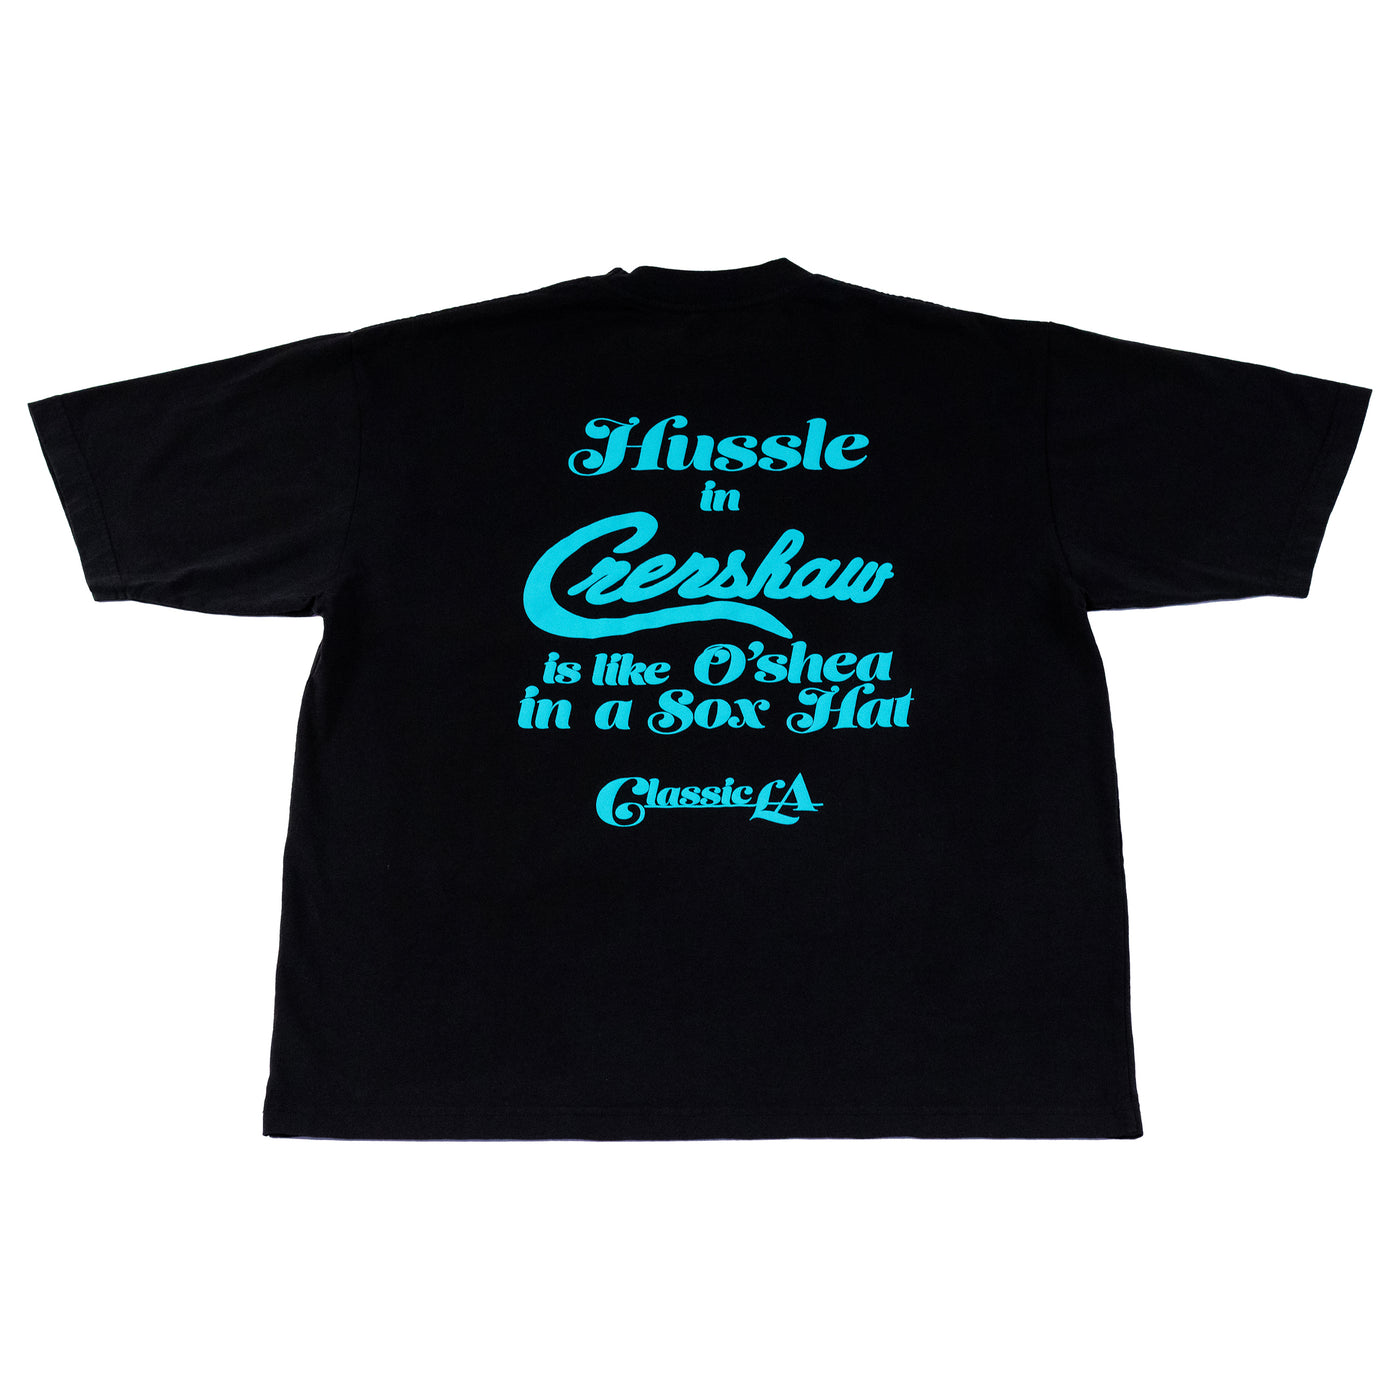 Crenshaw Classic LA T-Shirt - Black/Teal - Rear